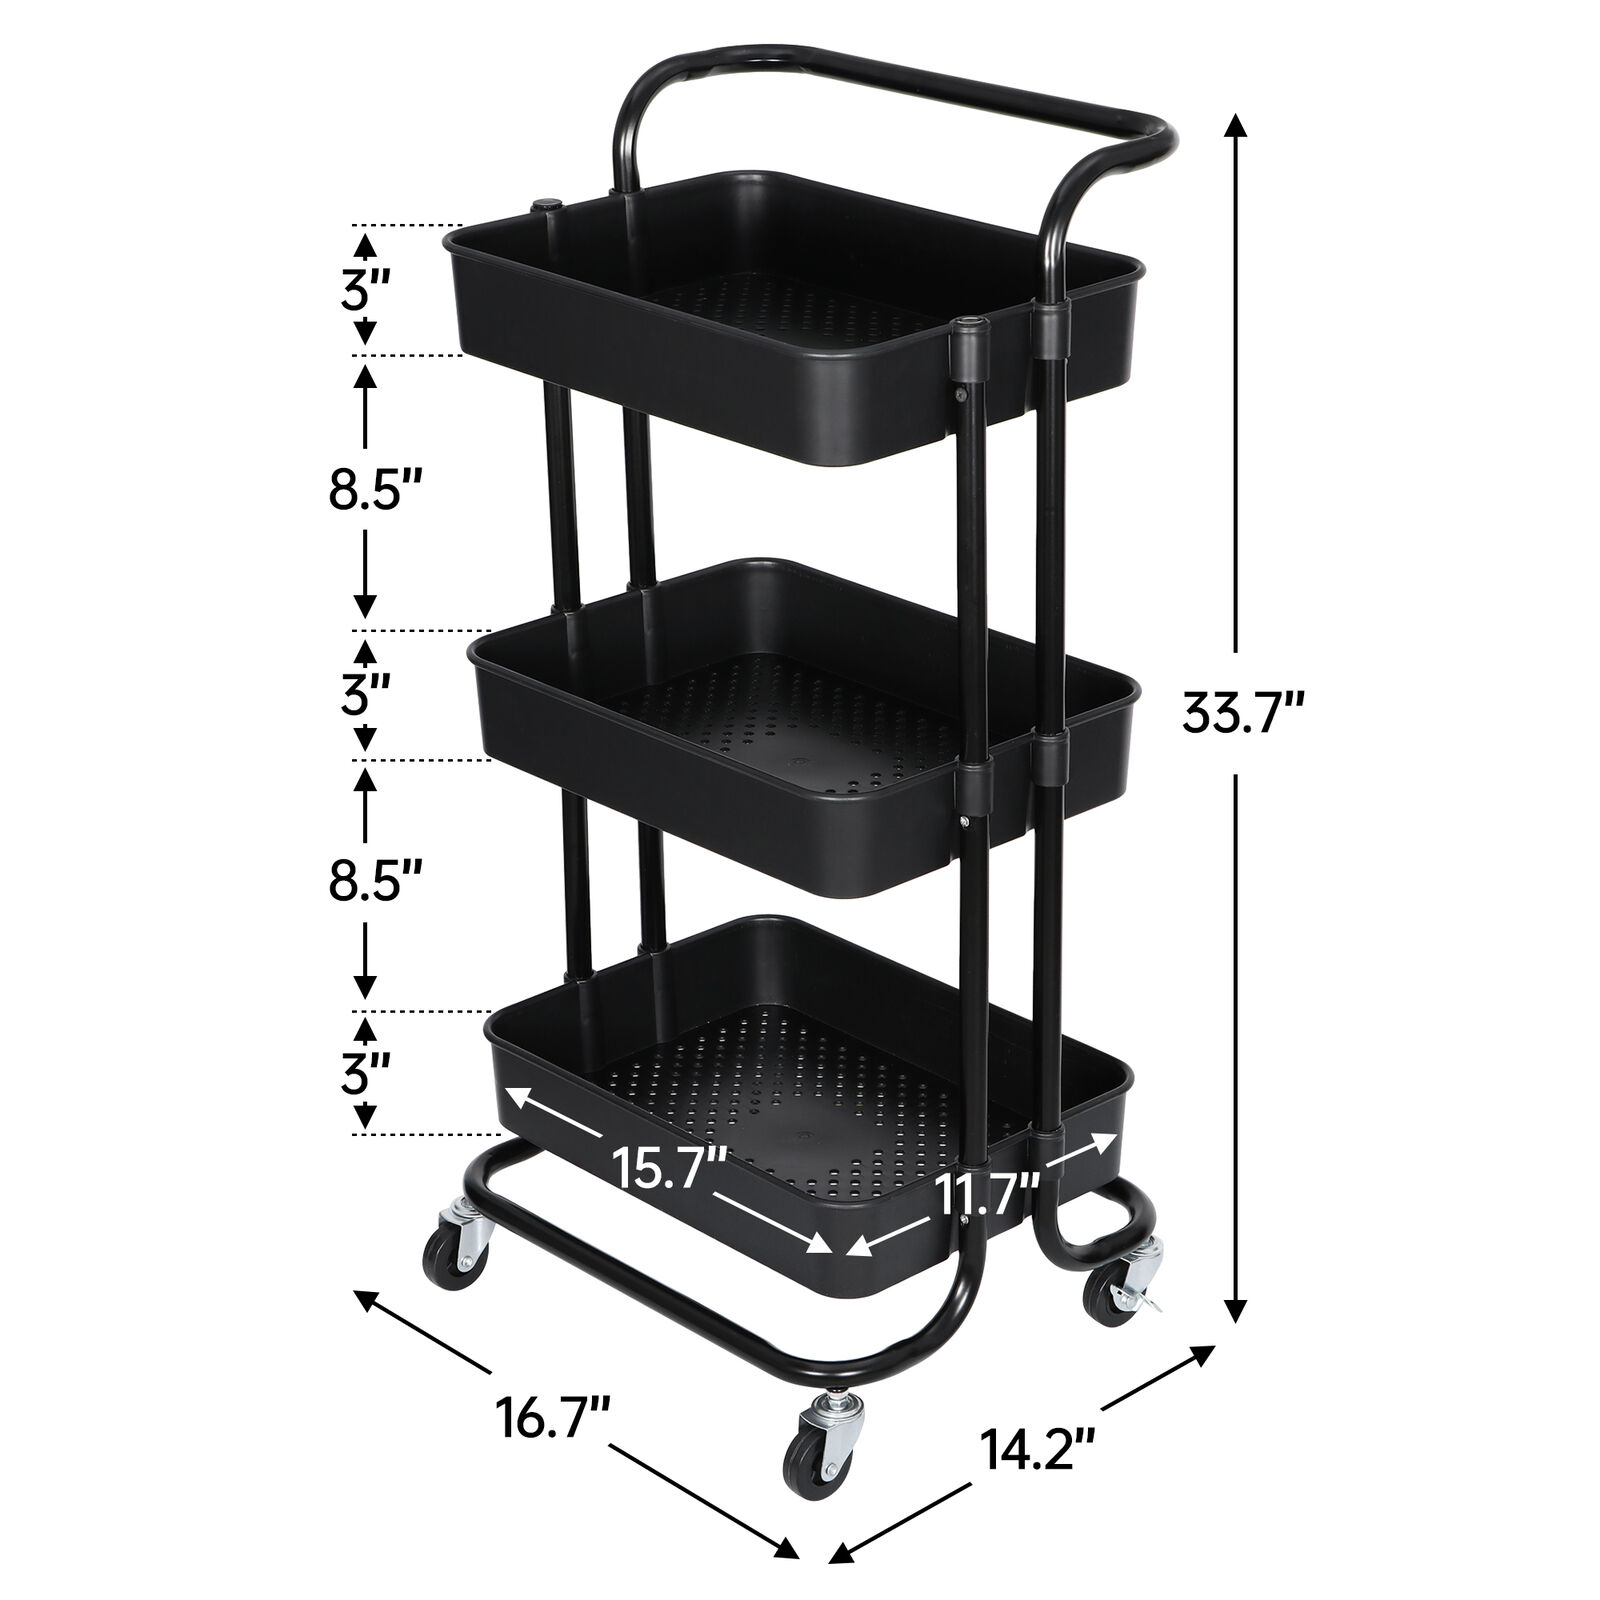 3-Tier Rolling Utility Cart Storage Cart Organizer for Kitchen Bathroom Office